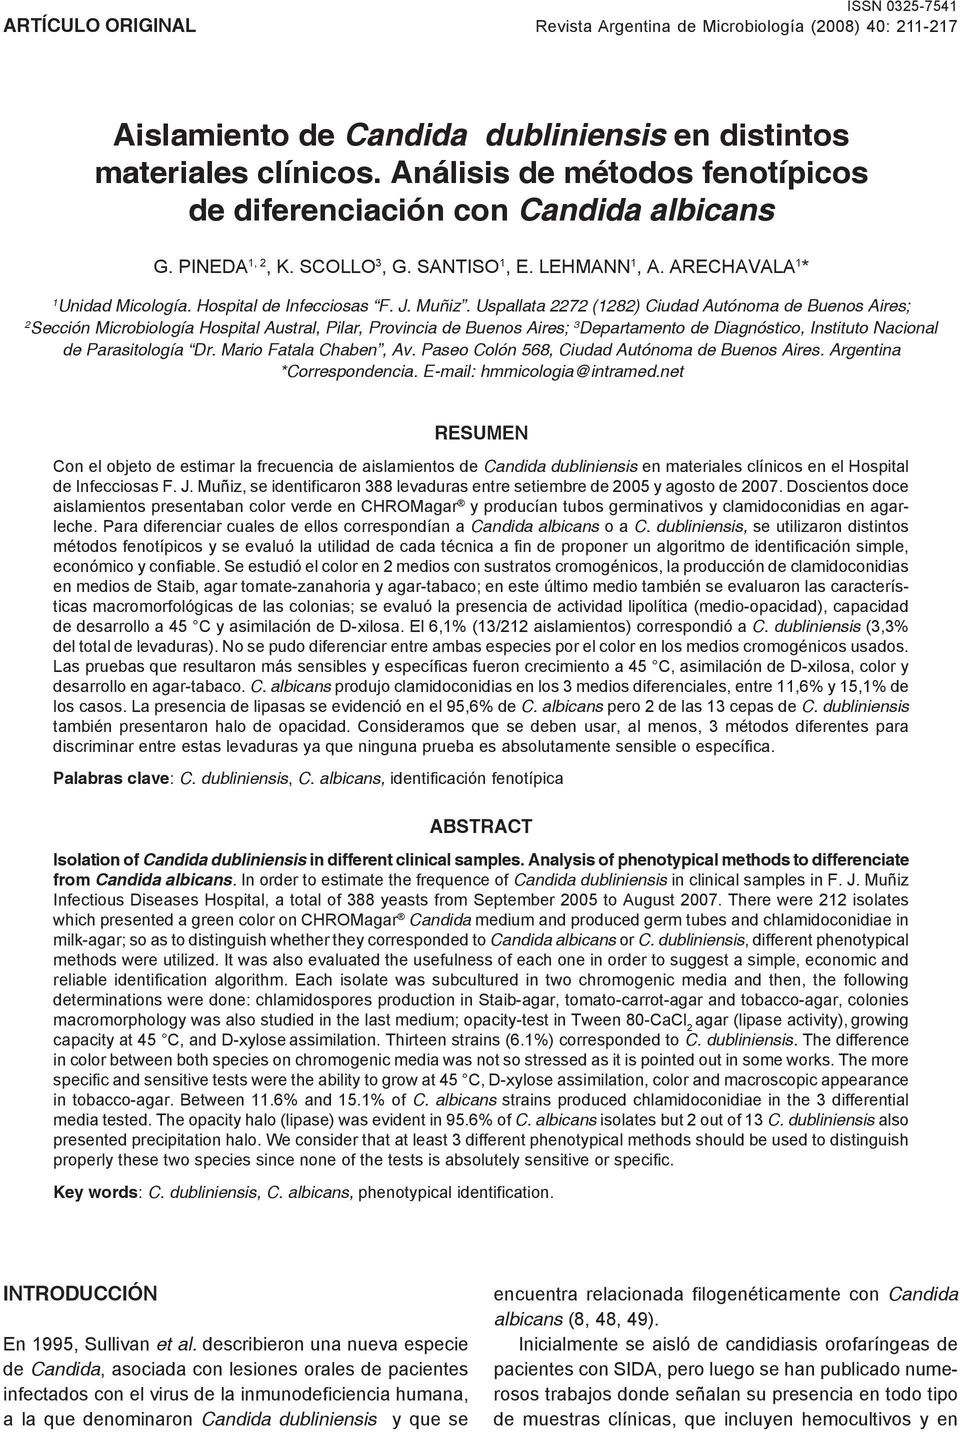 Análisis de métodos fenotípicos de diferenciación con Candida albicans G. PINEDA 1, 2, K. SCOLLO 3, G. SANTISO 1, E. LEHMANN 1, A. ARECHAVALA 1 * 1 Unidad Micología. Hospital de Infecciosas F. J.